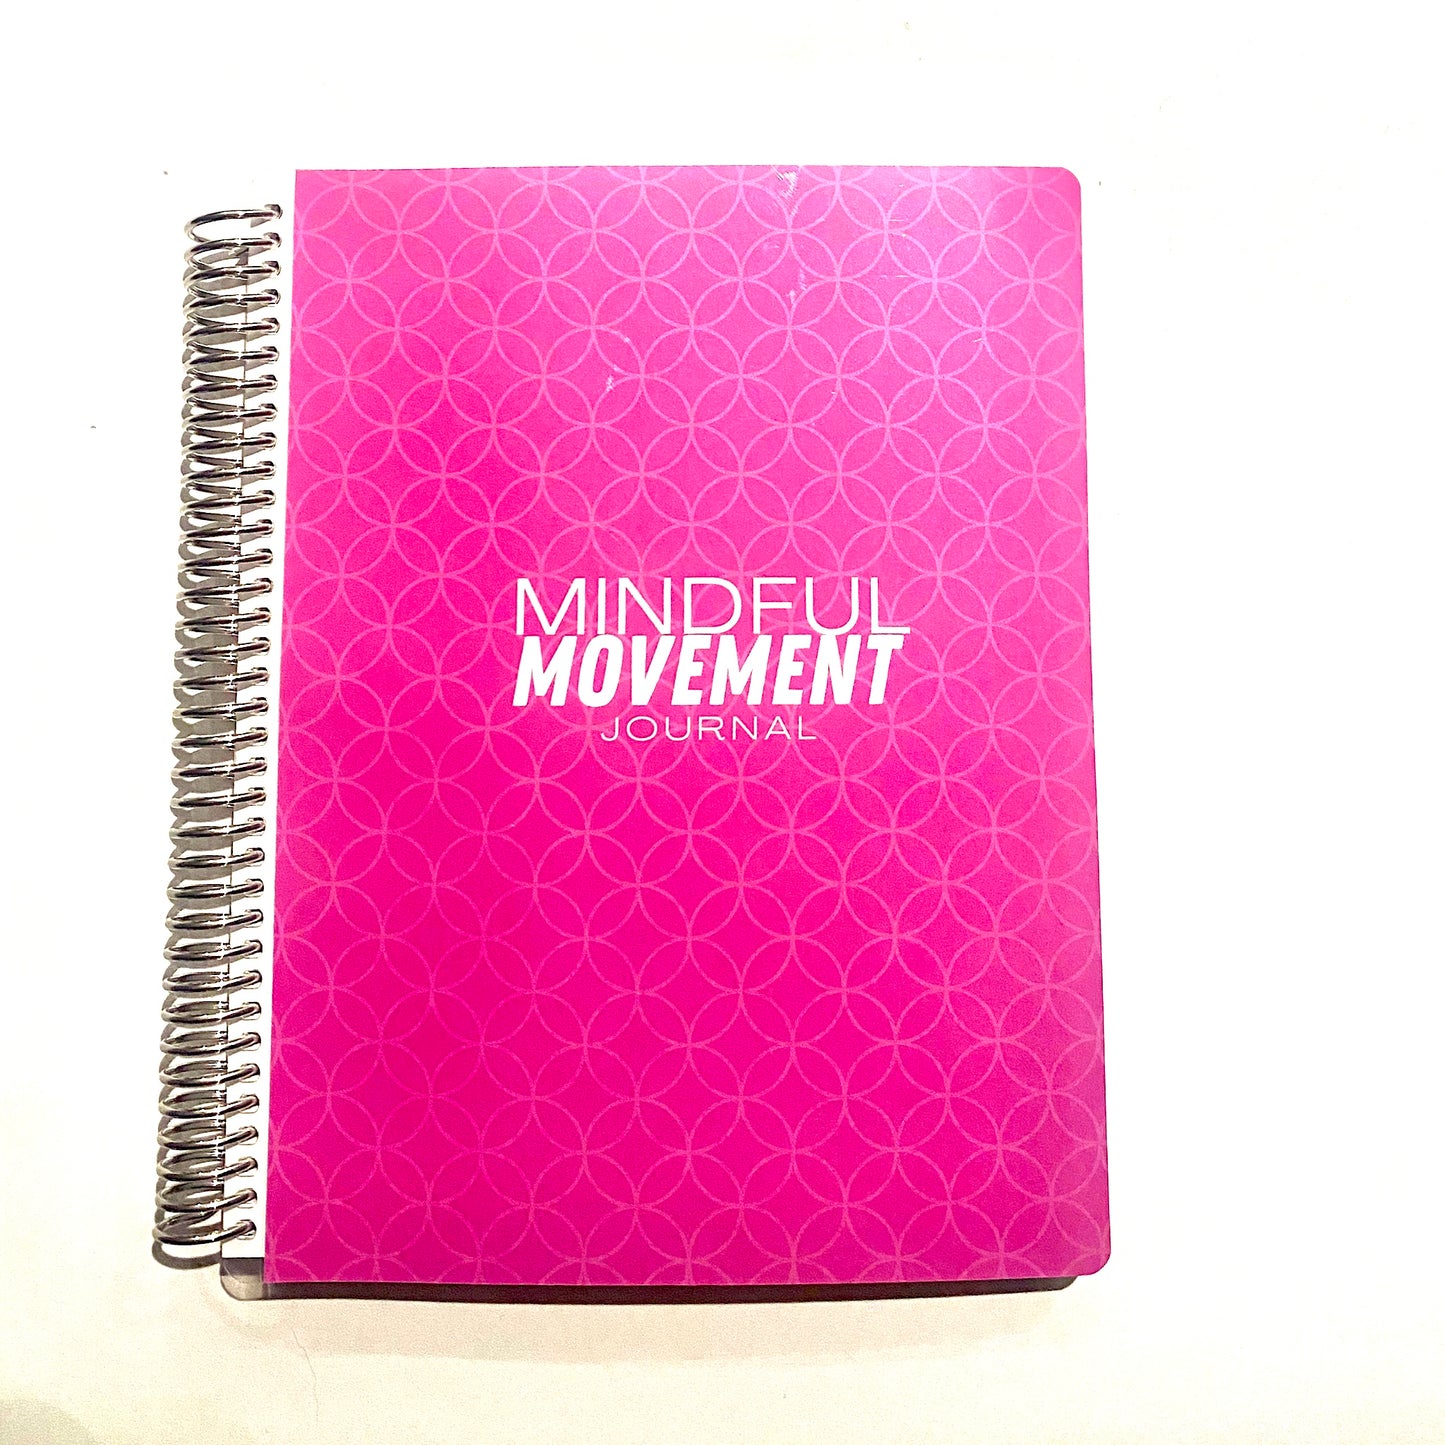 Mindful Movement Journal: Pink